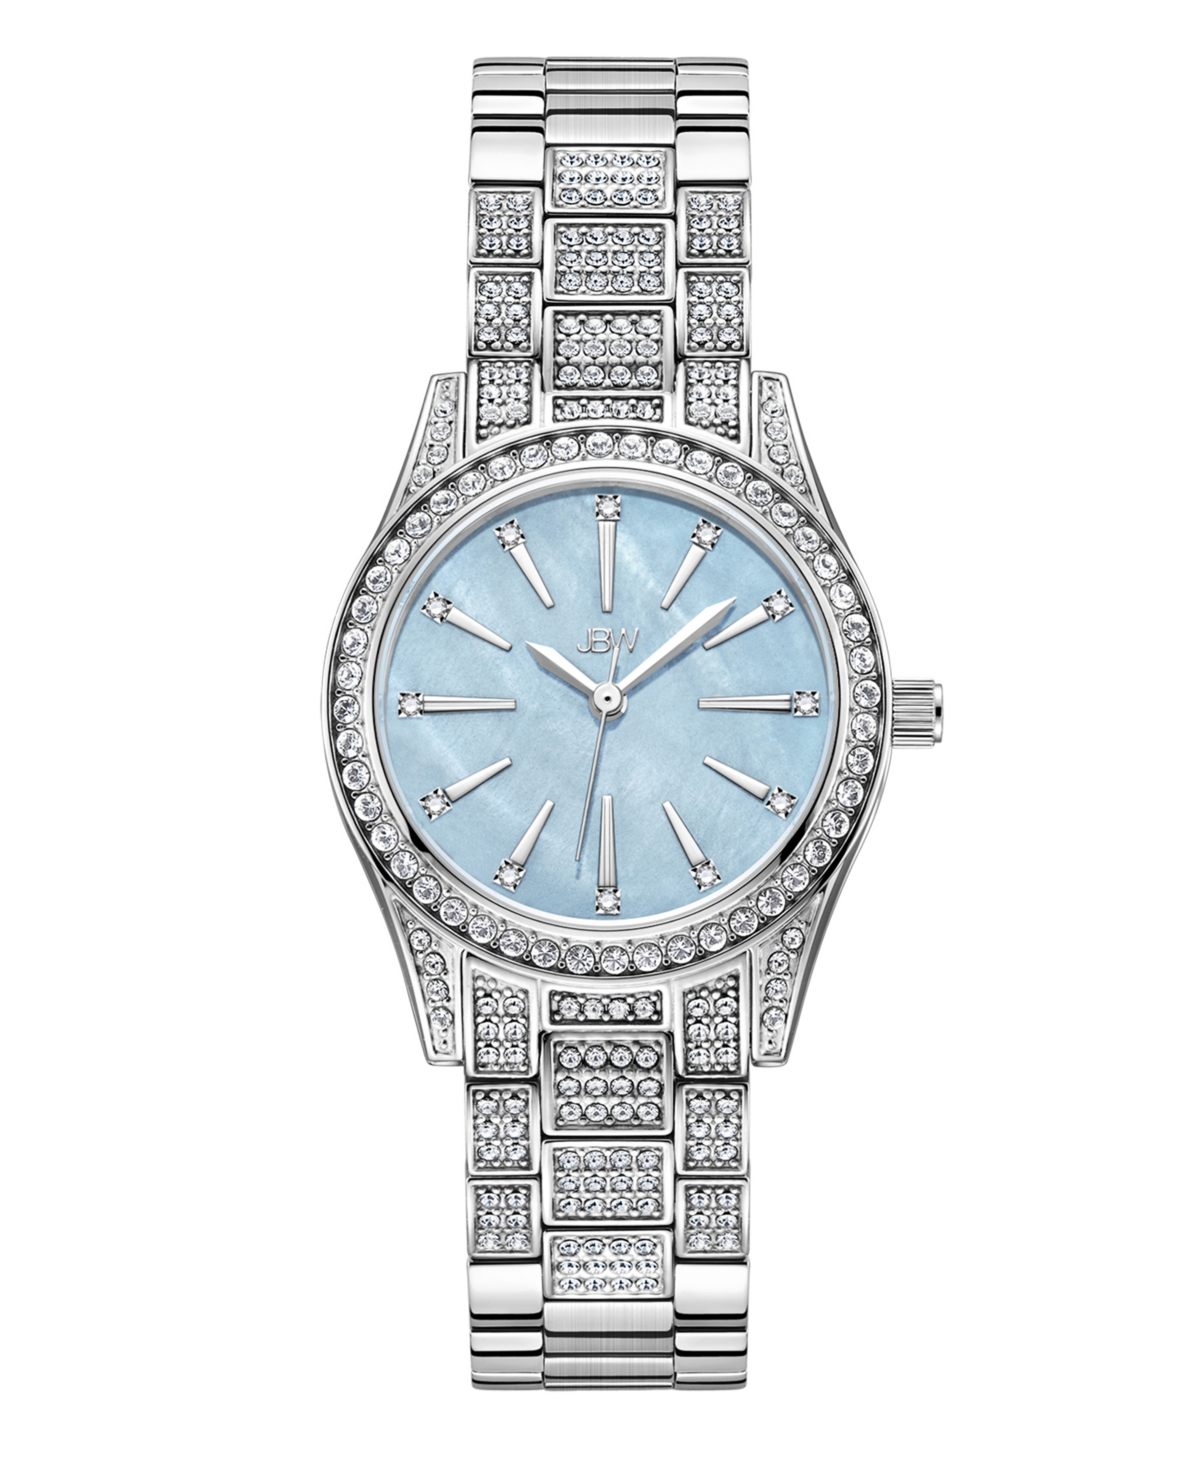 Women's Cristal Spectra Silver-Tone Stainless Steel Diamond Watch, 28mm - Stainless Steel